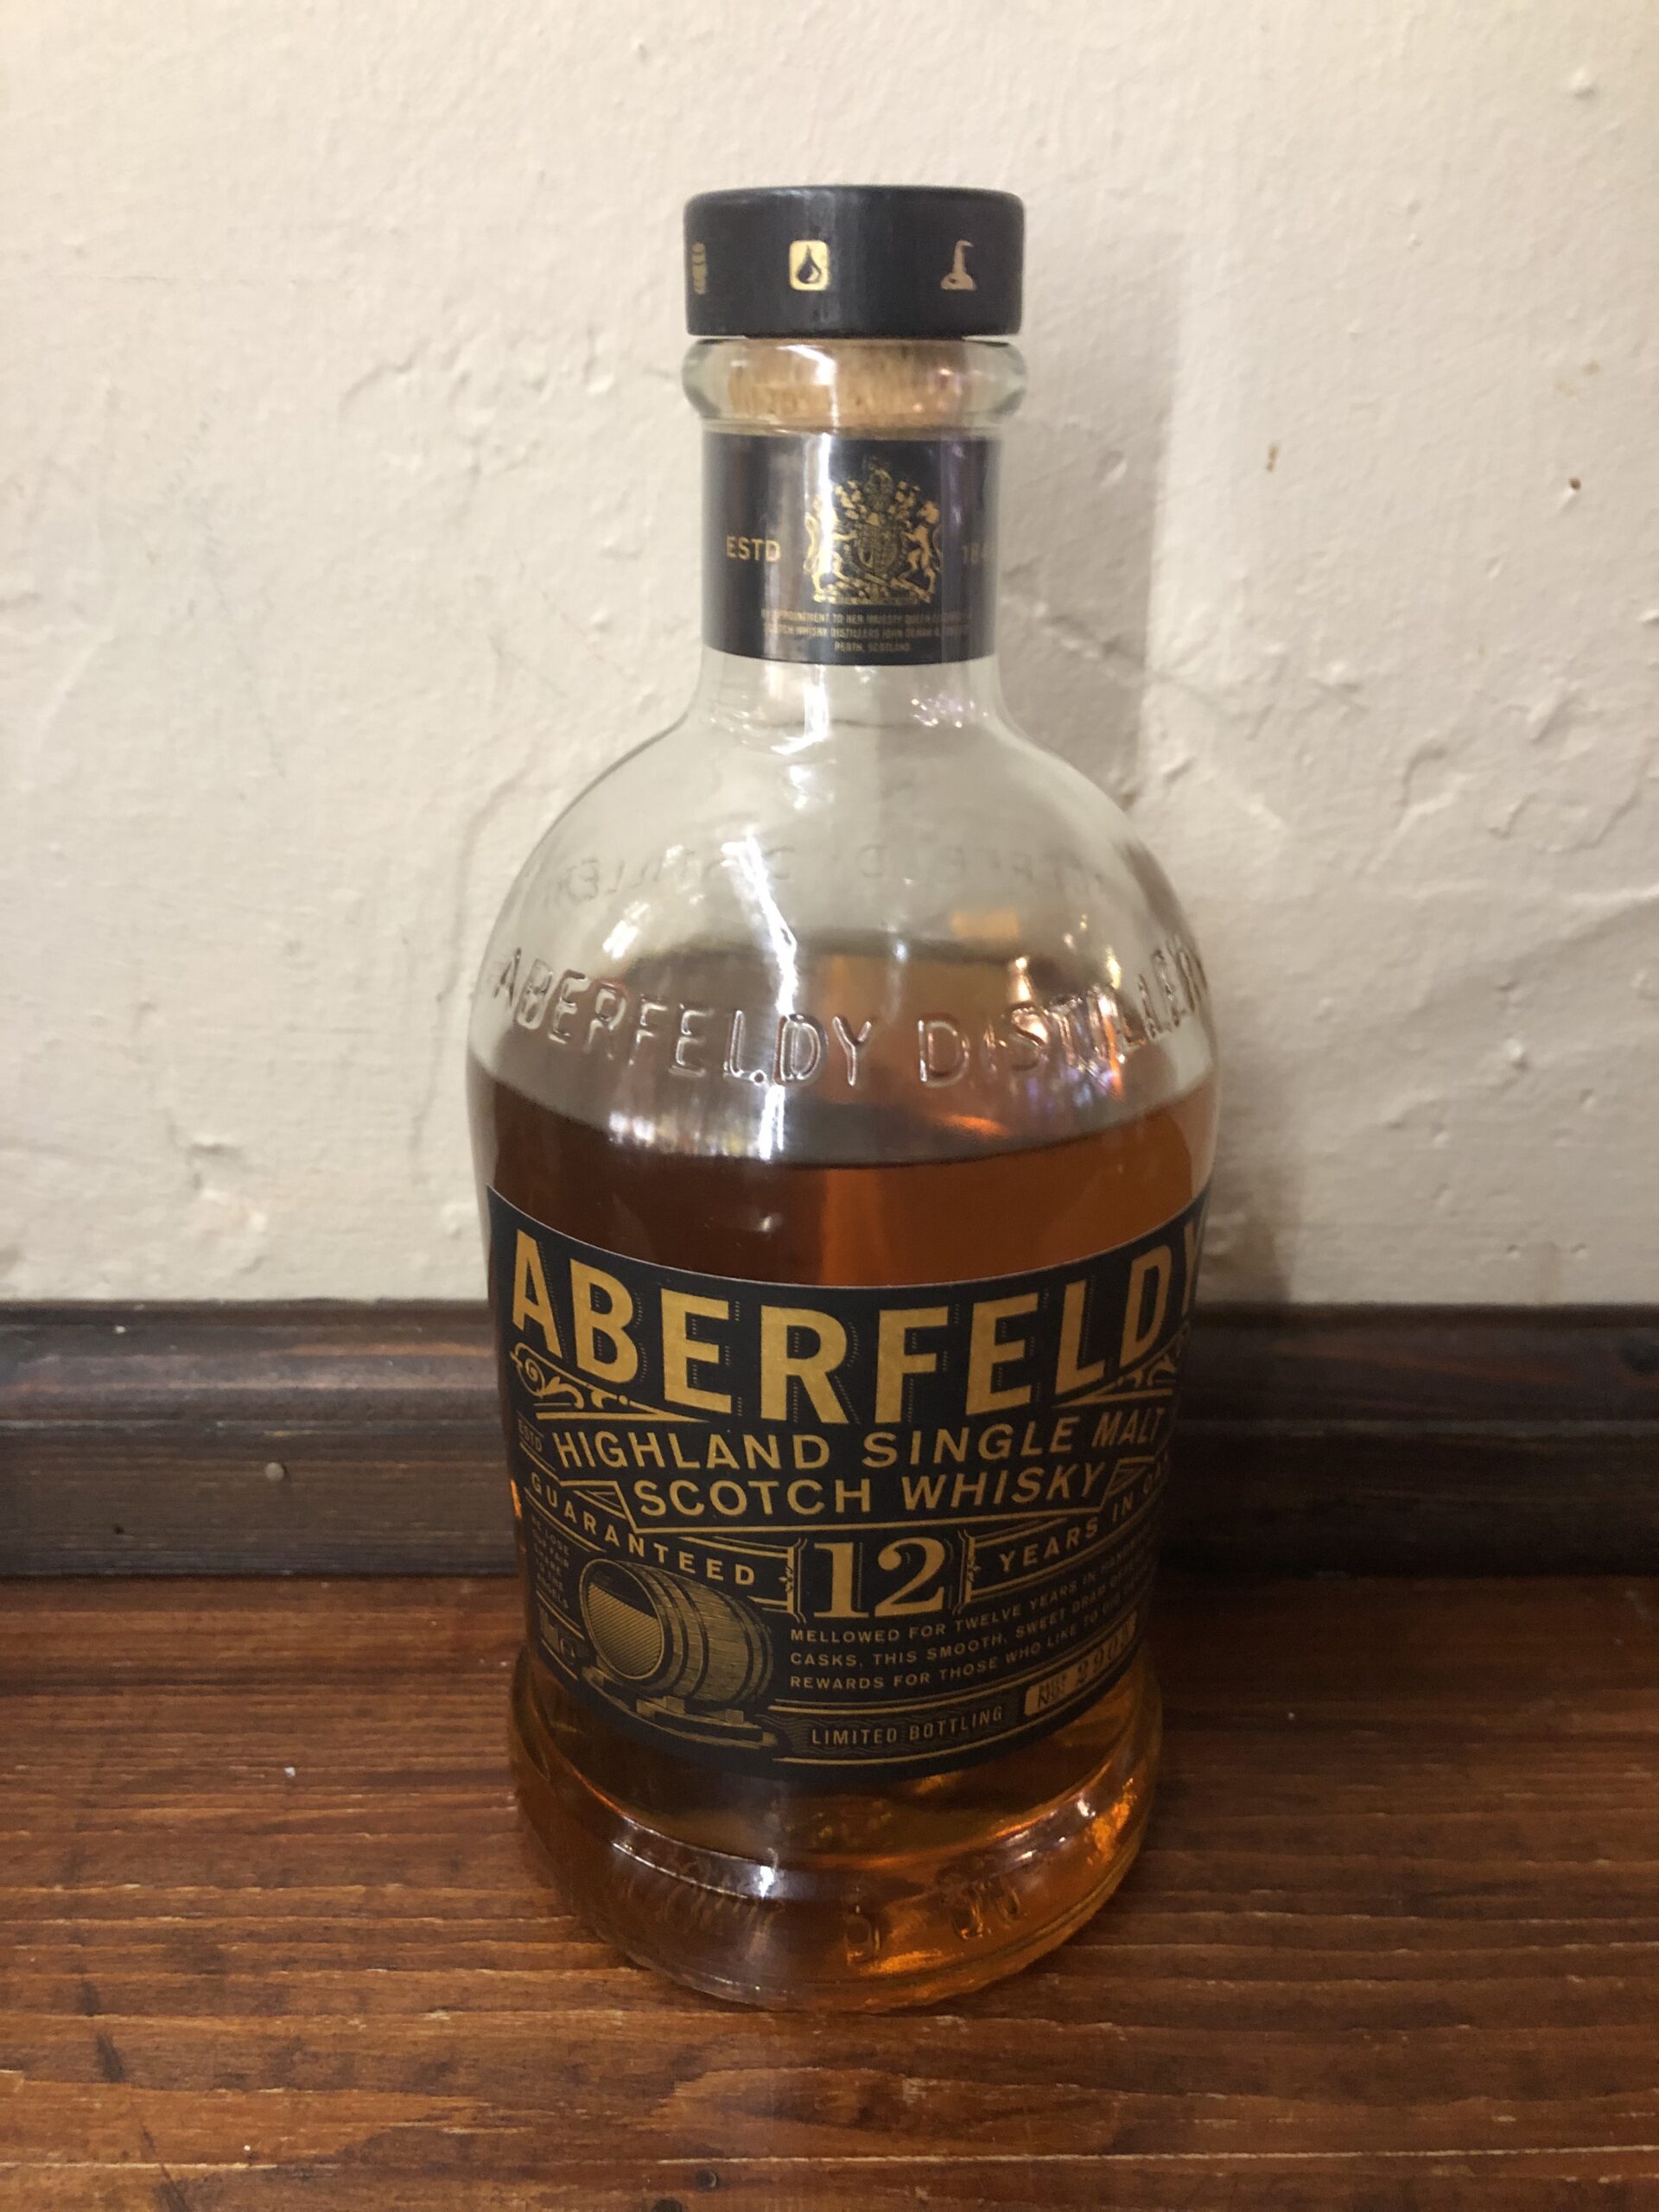 Aberfeldy Single Malt Scotch 12 yr.